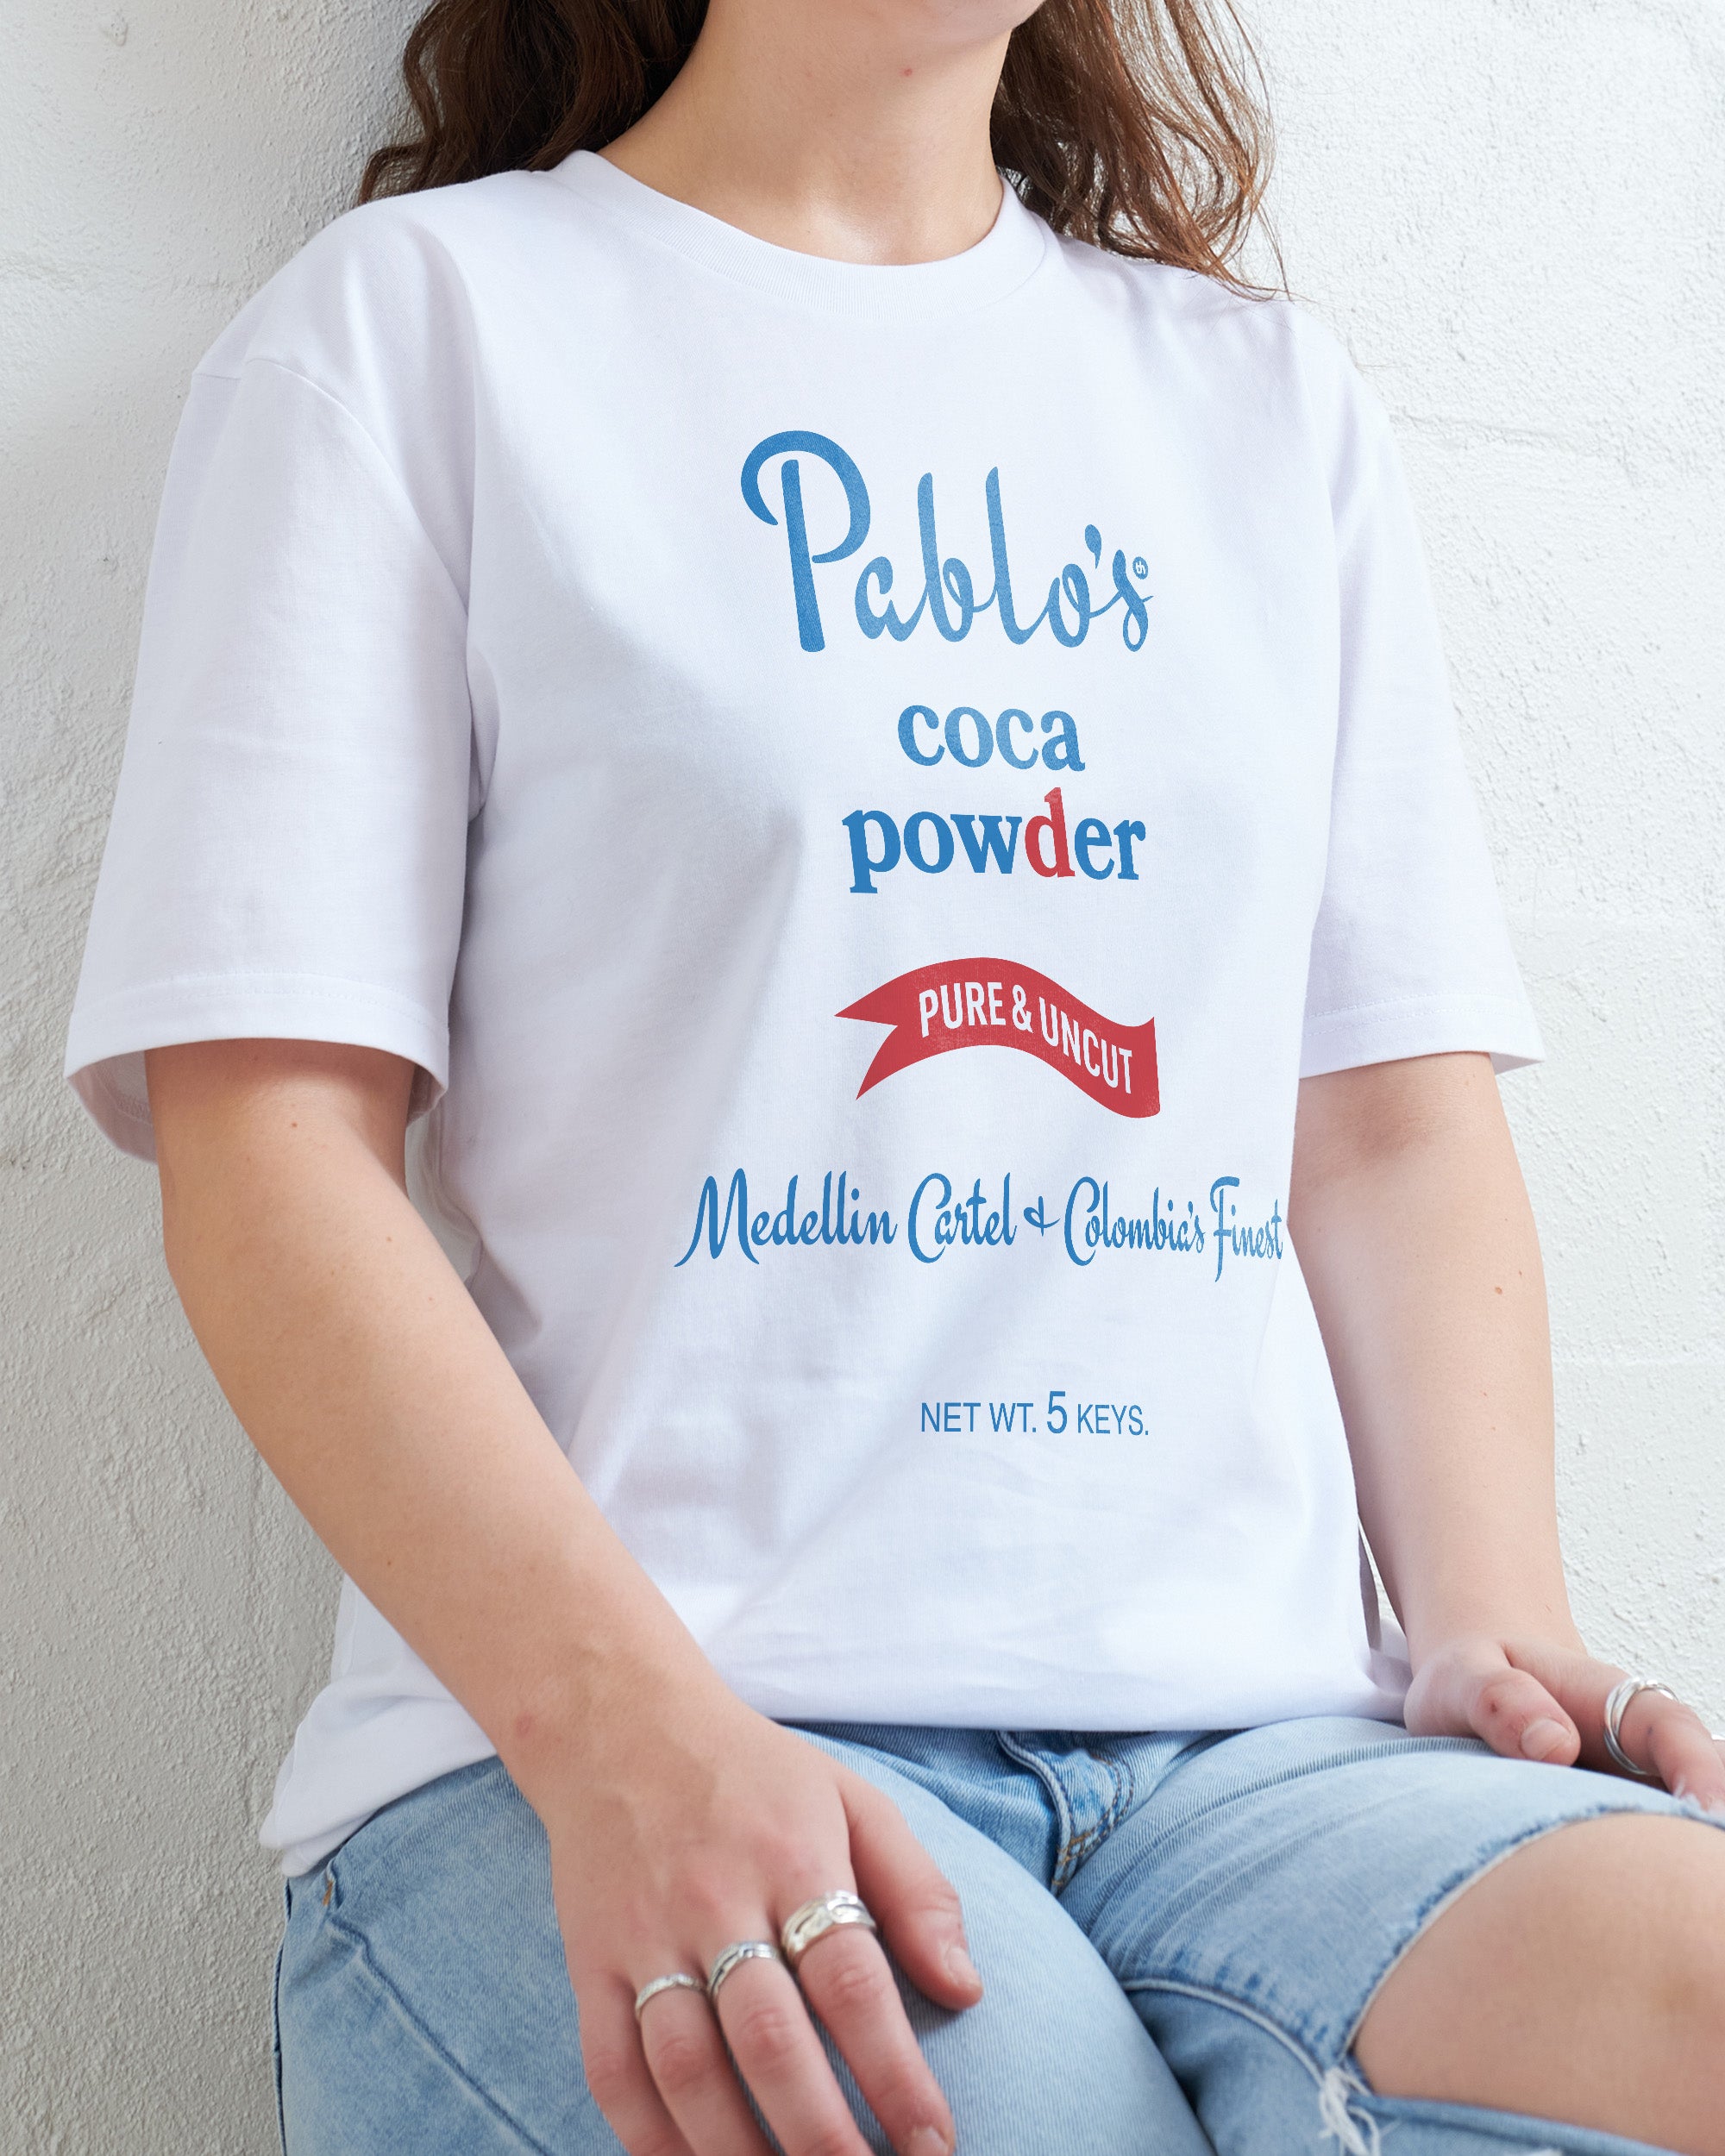 Pablo's Coca Powder T-Shirt Australia Online